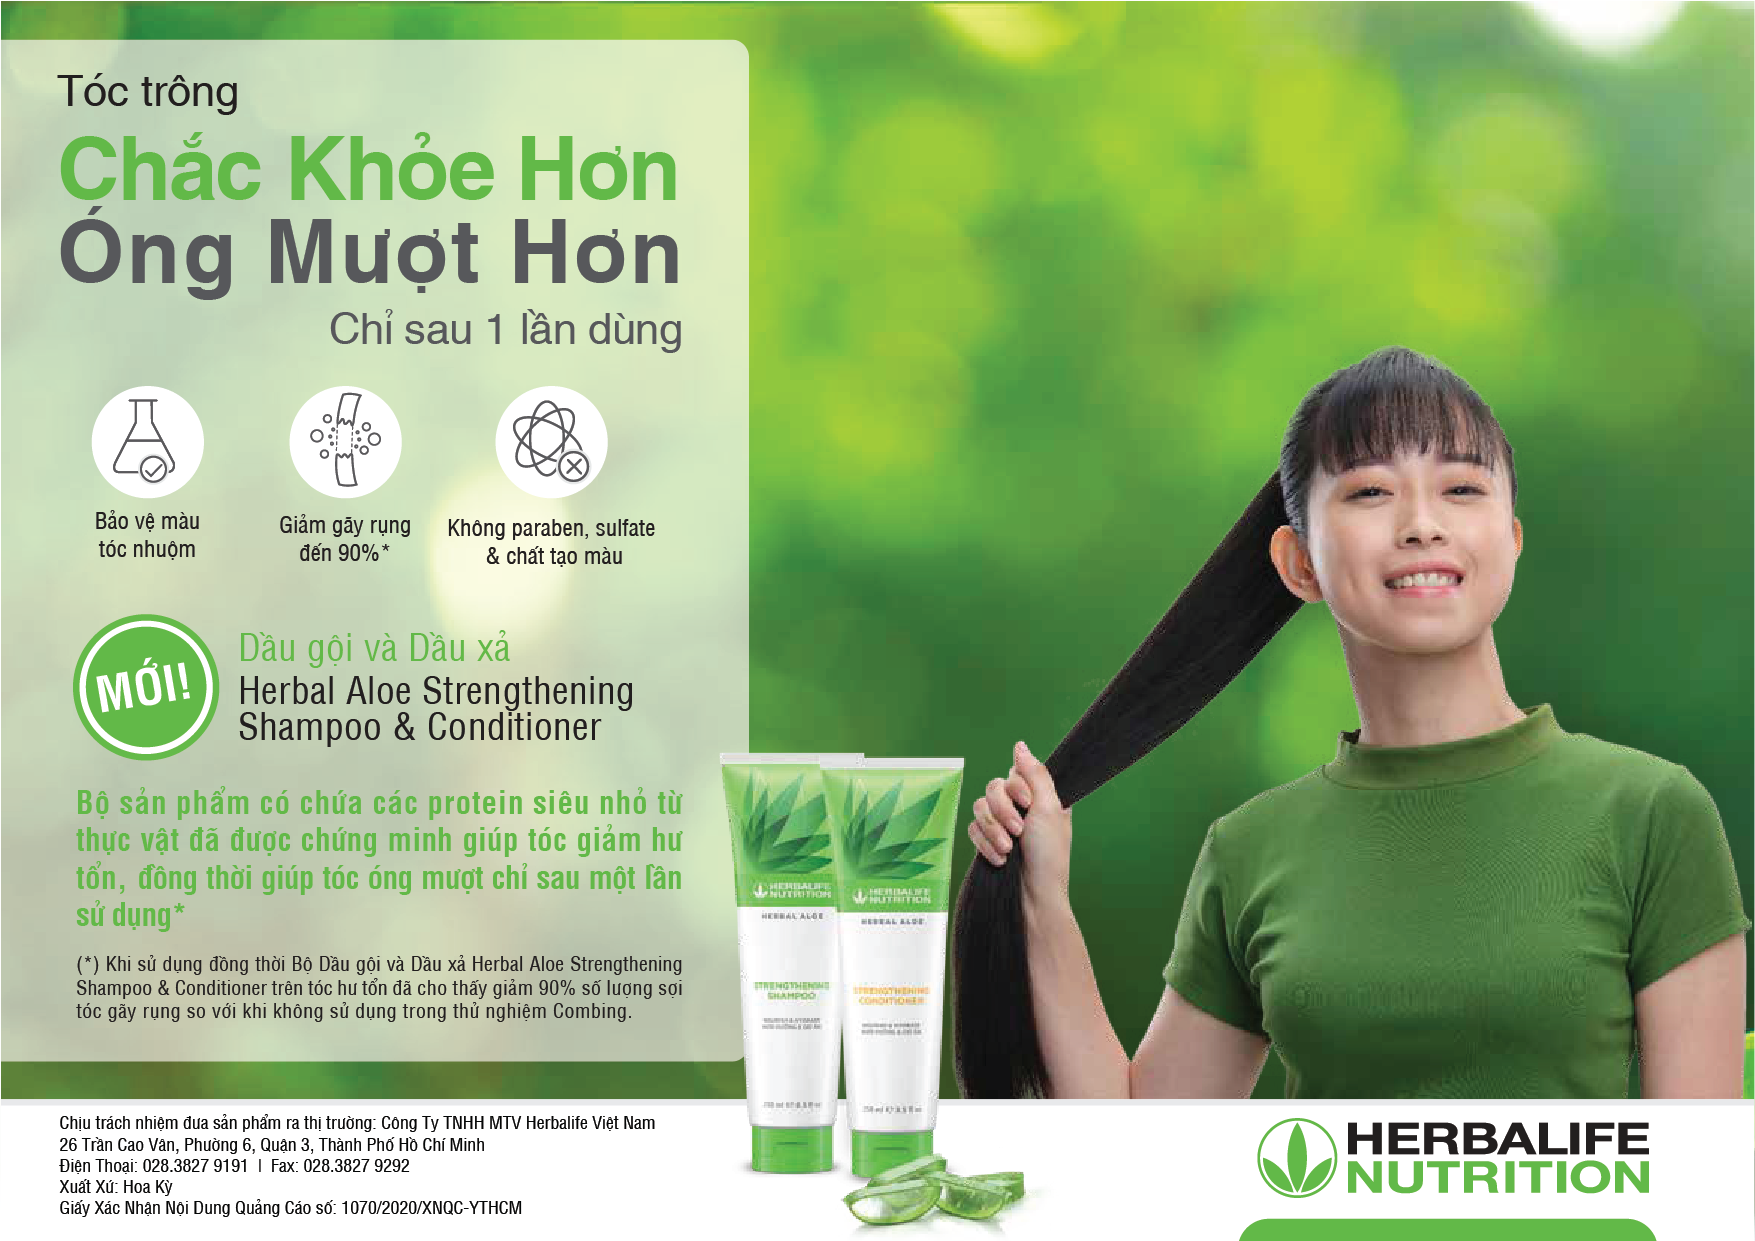 Herbalife Vietnam launches Herbal Aloe Shampoo and Herbal Aloe Conditioner